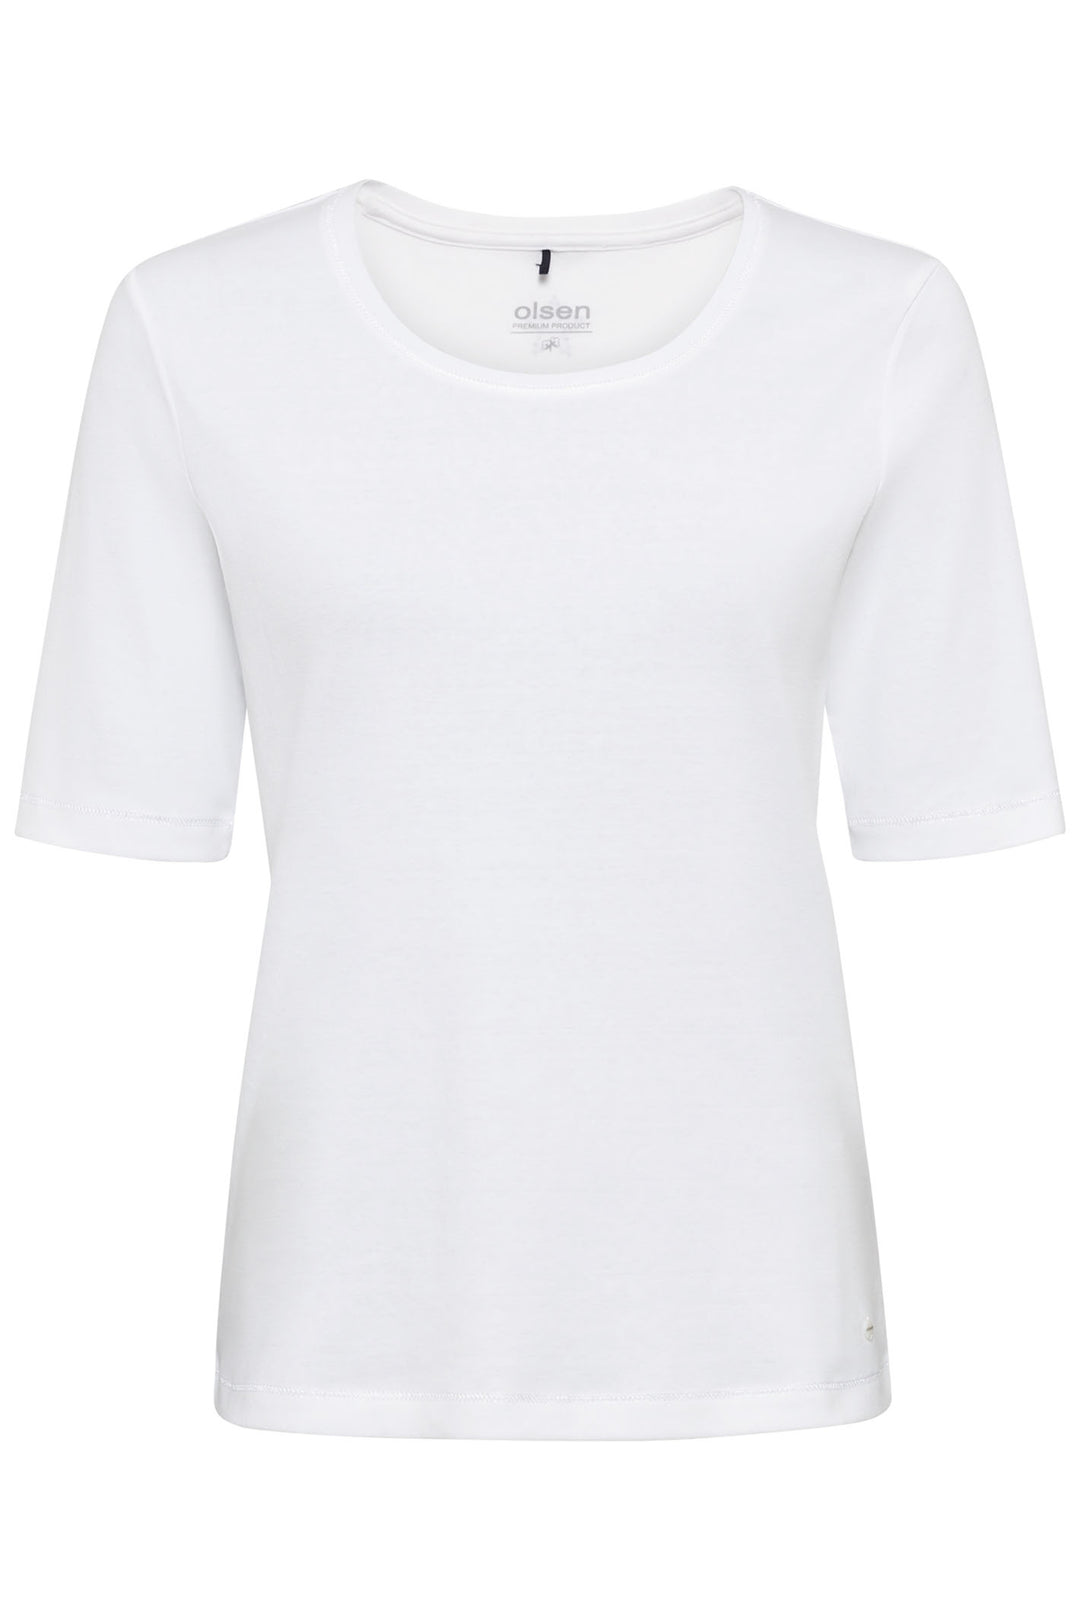 Olsen 11100177 Power White Round Neck T-Shirt - Dotique Chesterfield